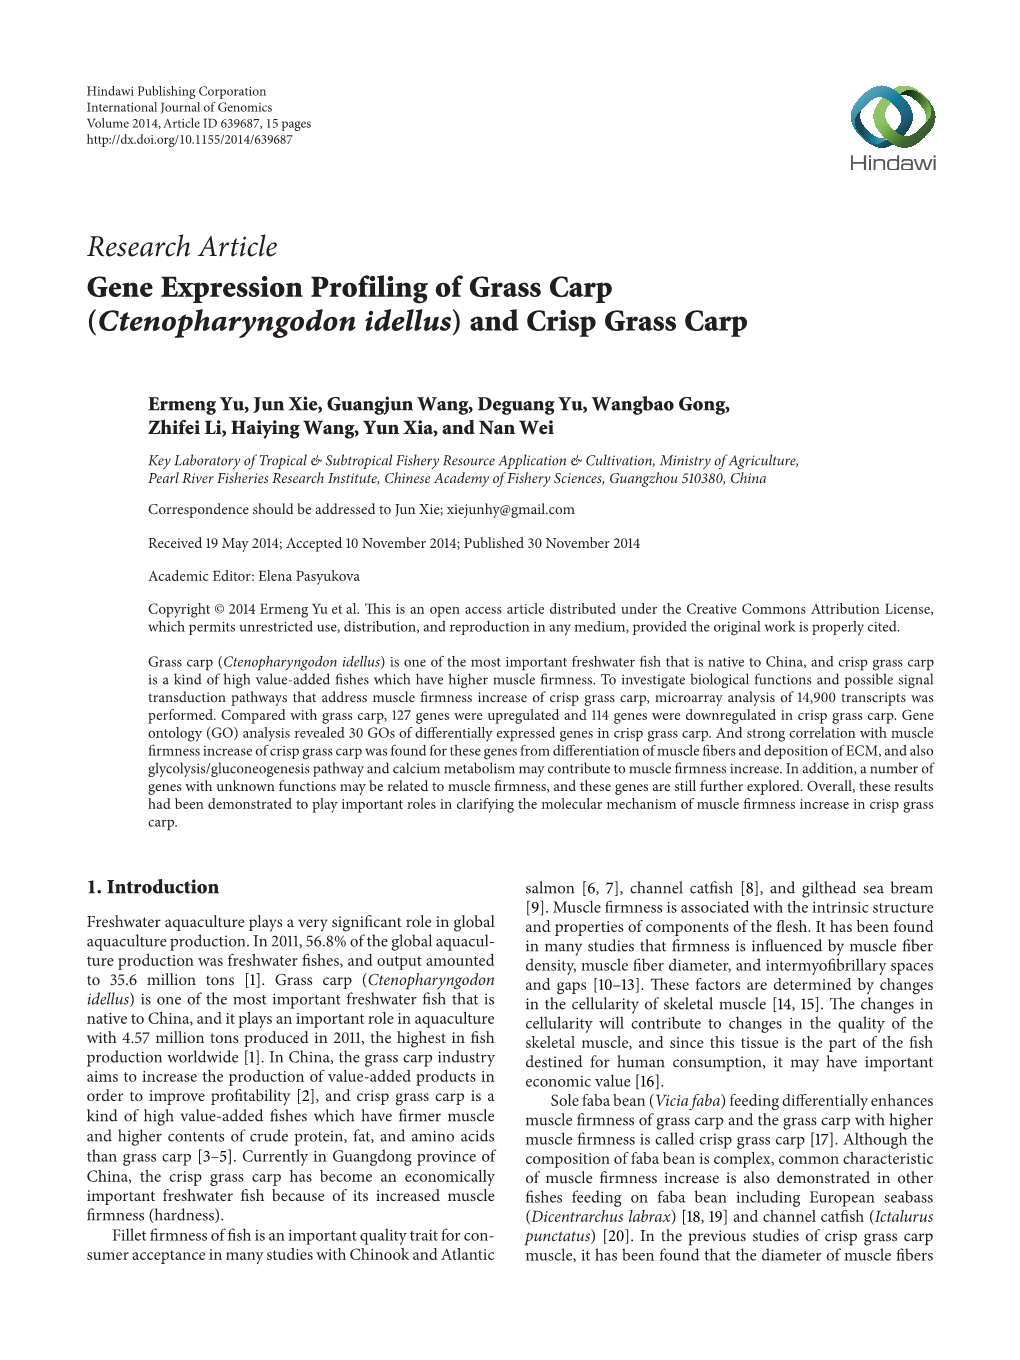 Gene Expression Profiling of Grass Carp (Ctenopharyngodon Idellus) and Crisp Grass Carp